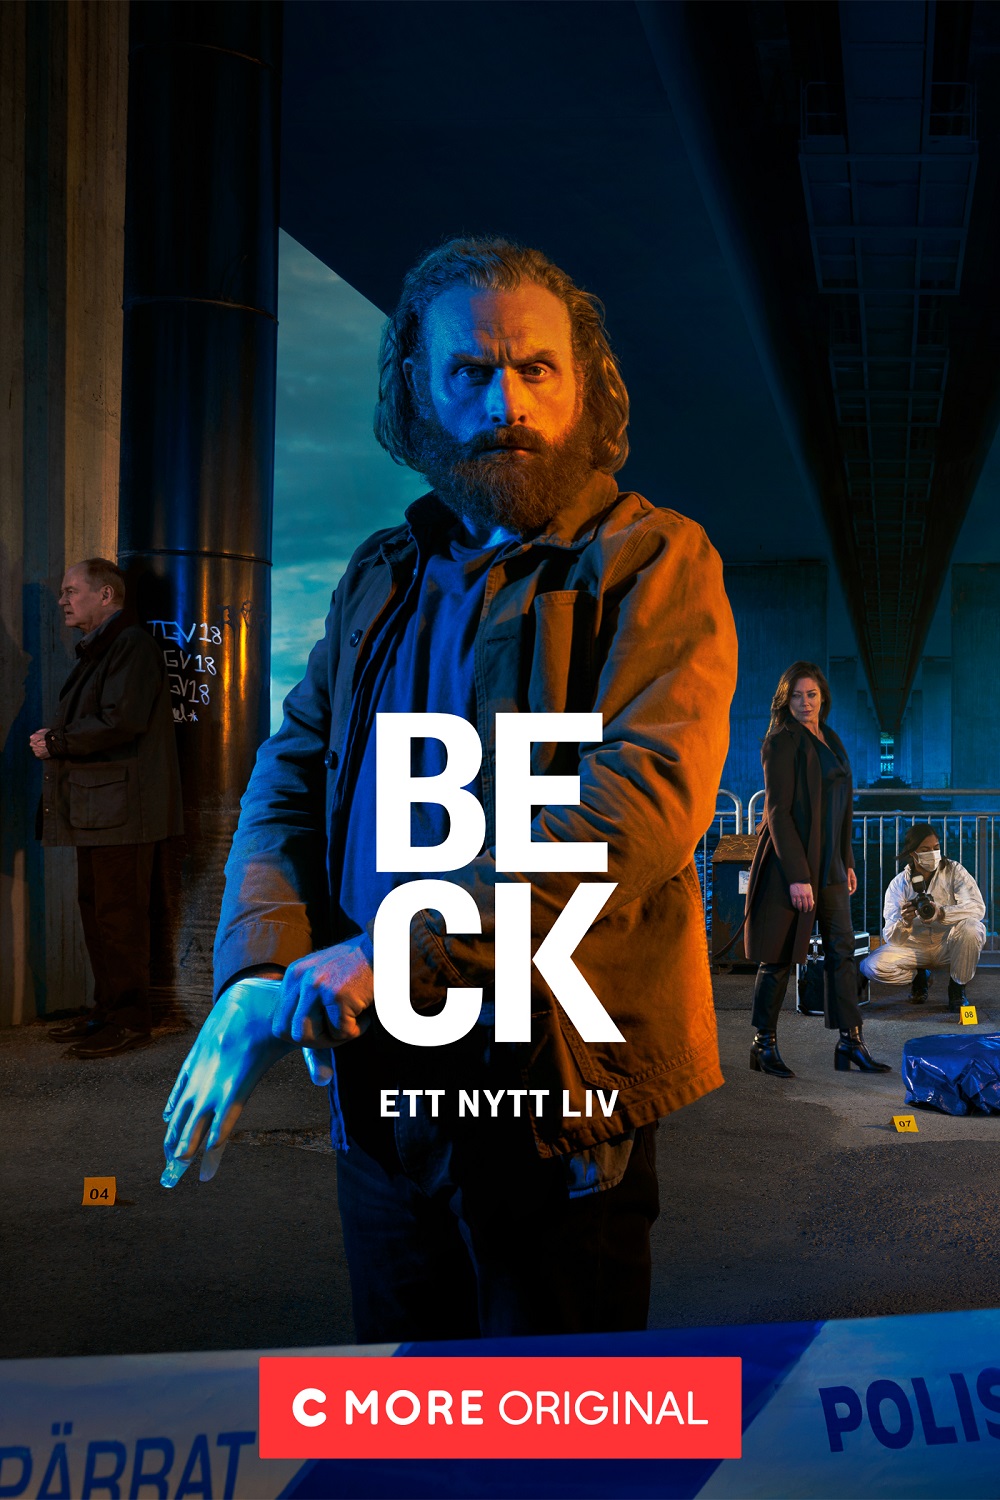 Beck: Ett nytt liv